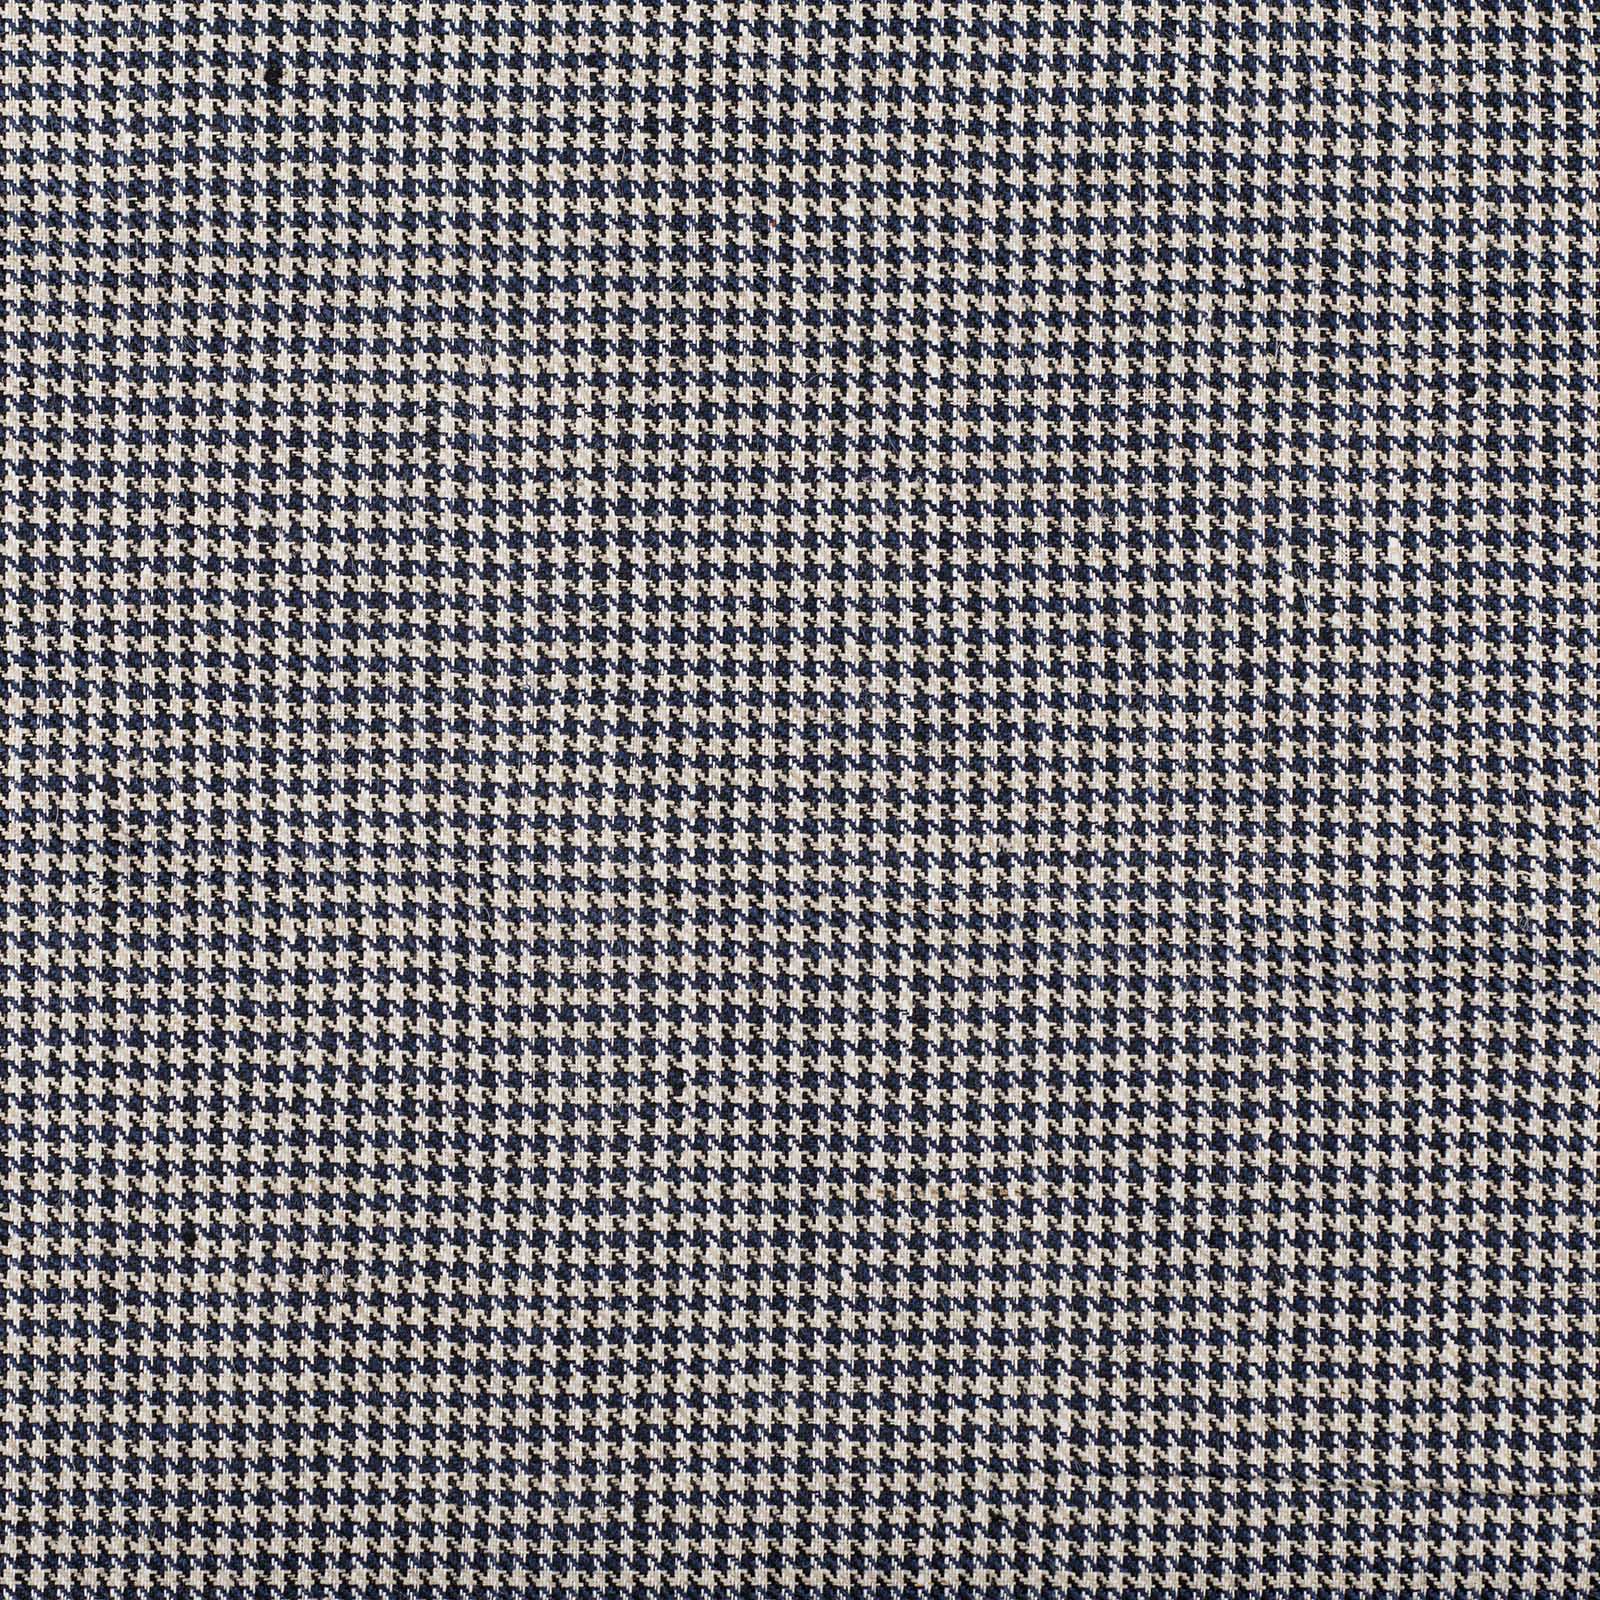 Italian Textured Houndstooth Print Cotton - Cream/Blue